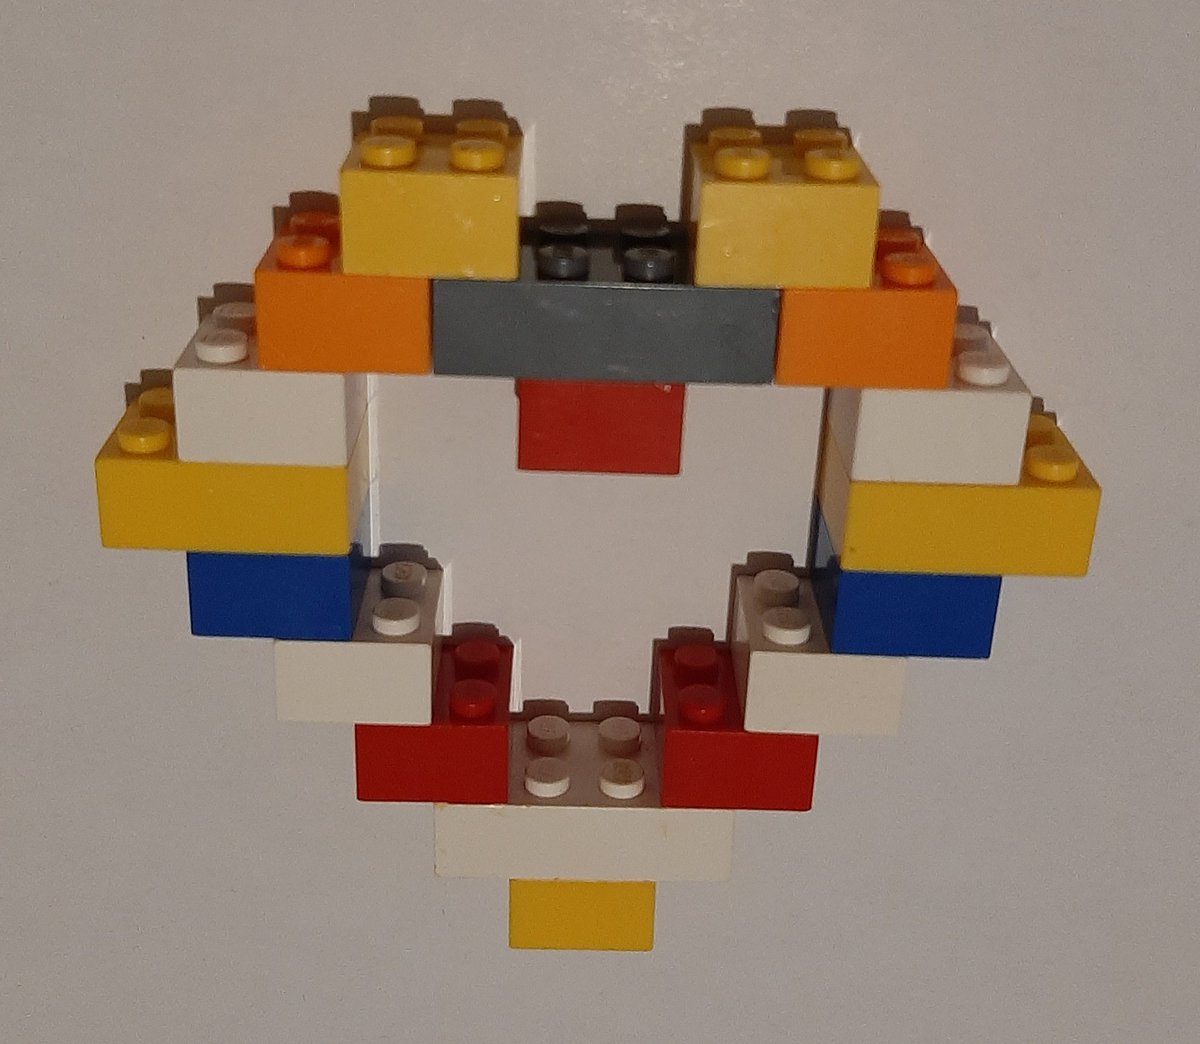 #BuildToGive
#KeremBürsin 
#LEGO